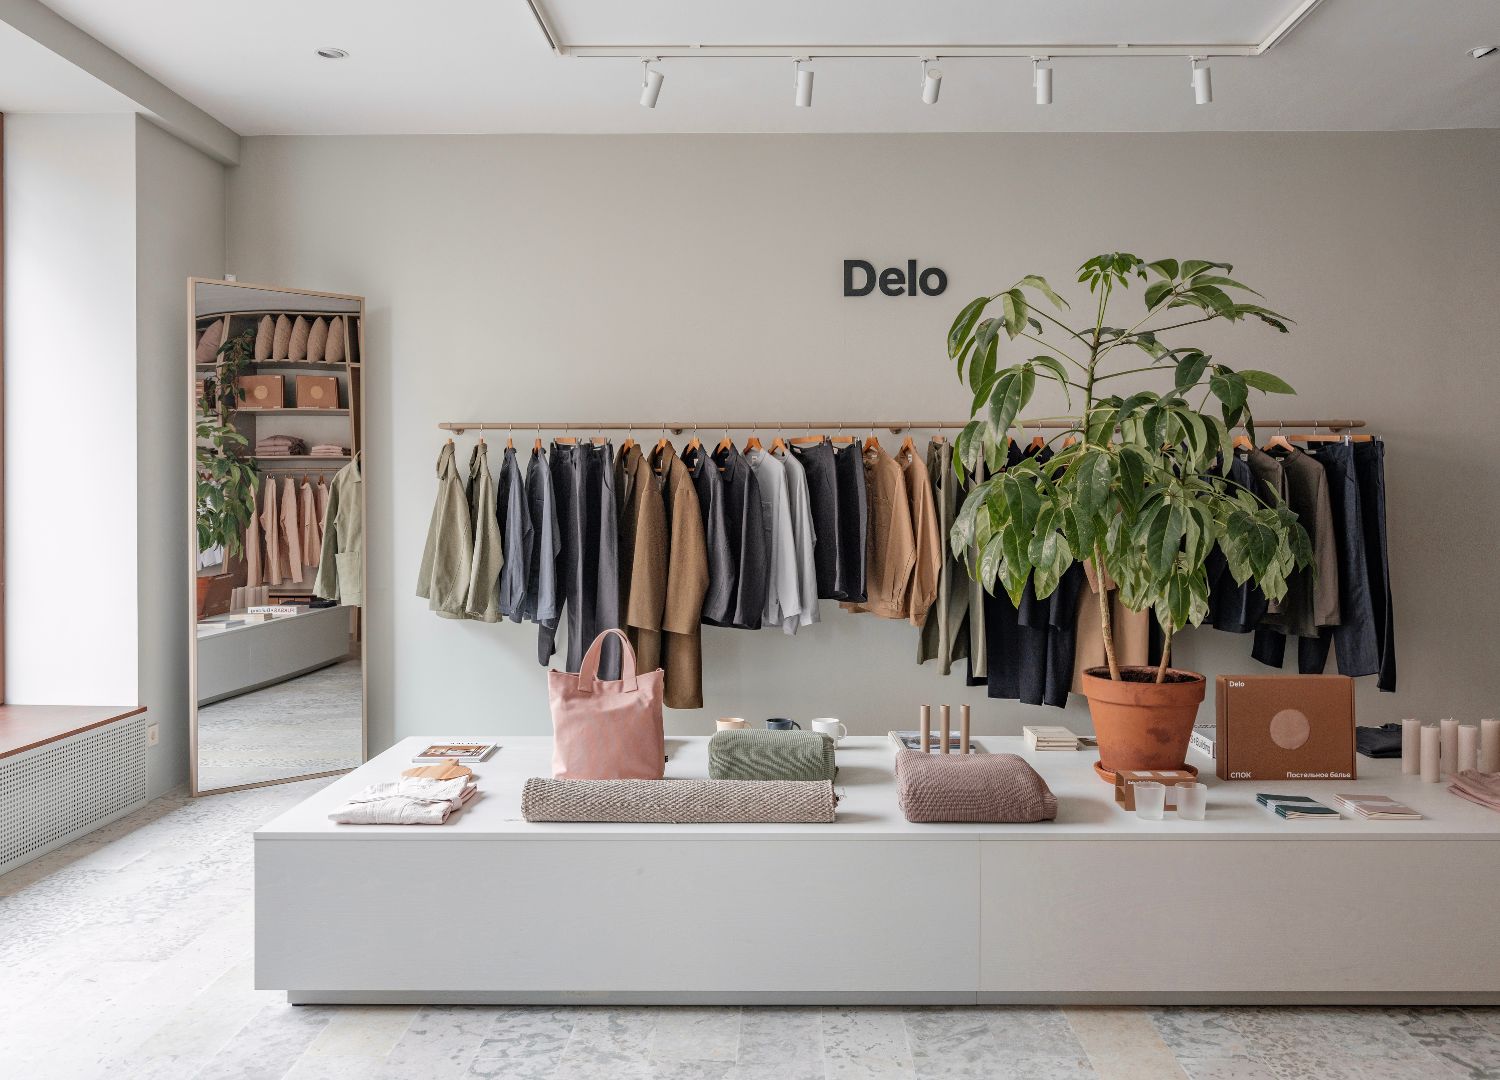 Delo’s approach to design